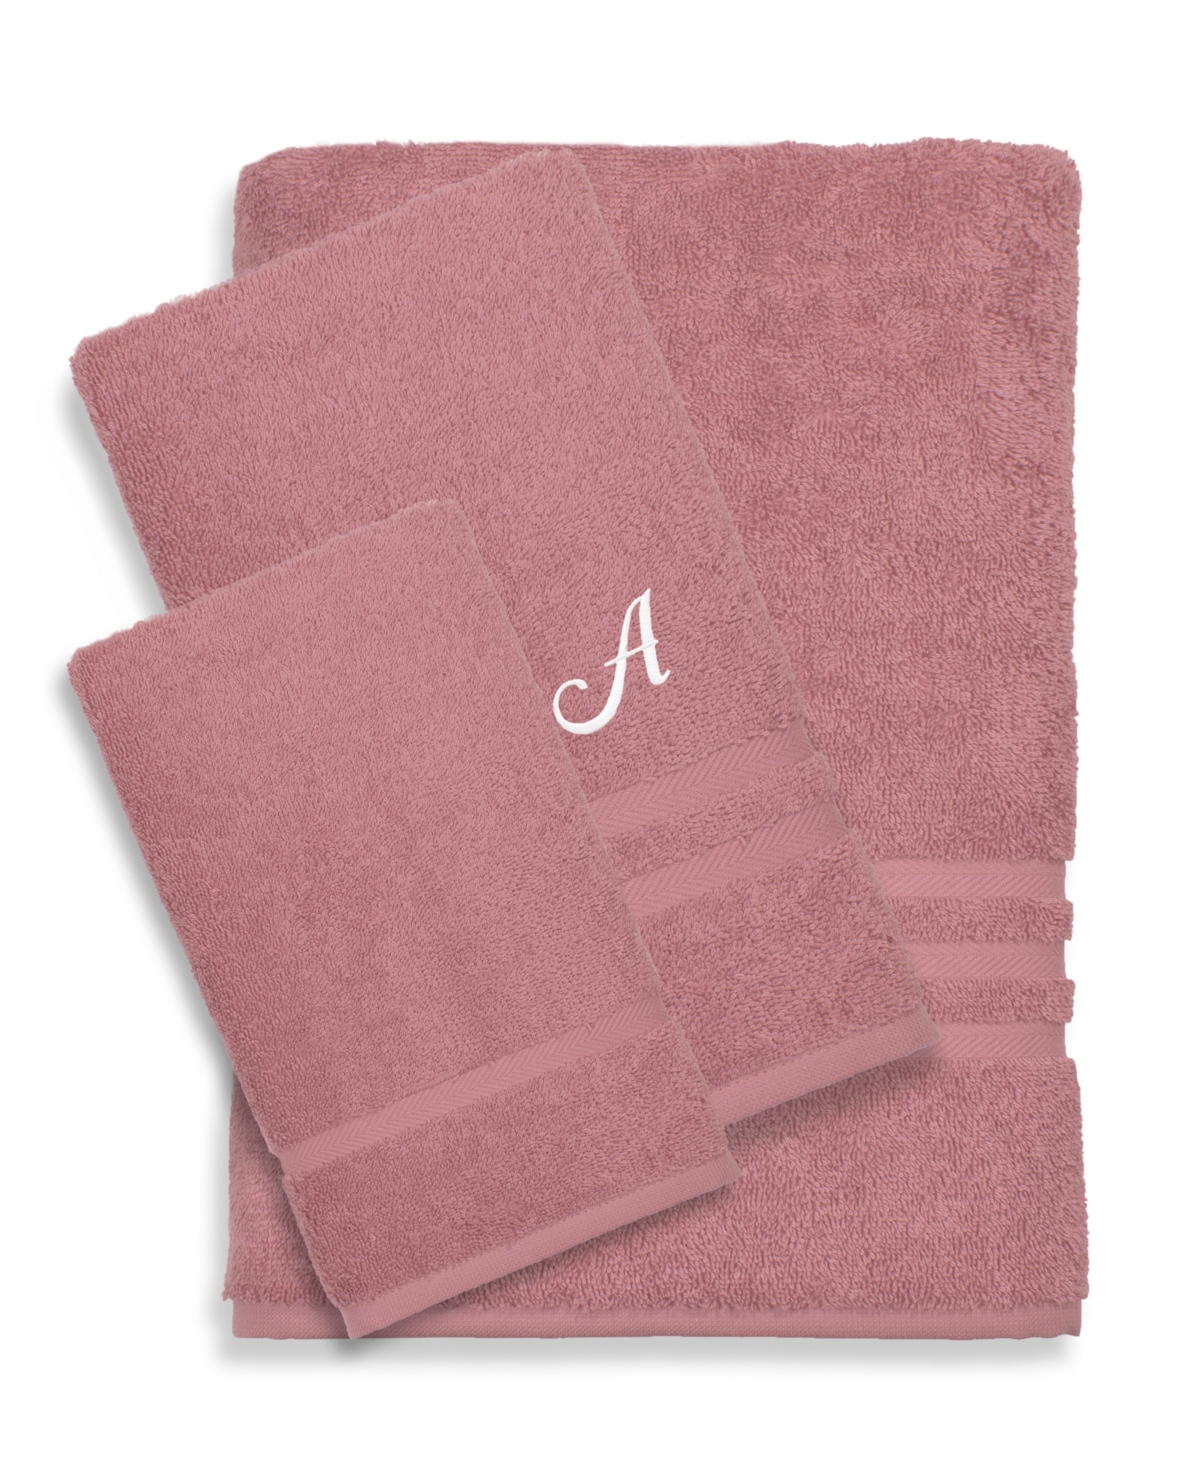 Linum Home Textiles Turkish Cotton Personalized Denzi Towel Set, 3 Piece Bedding In Pink